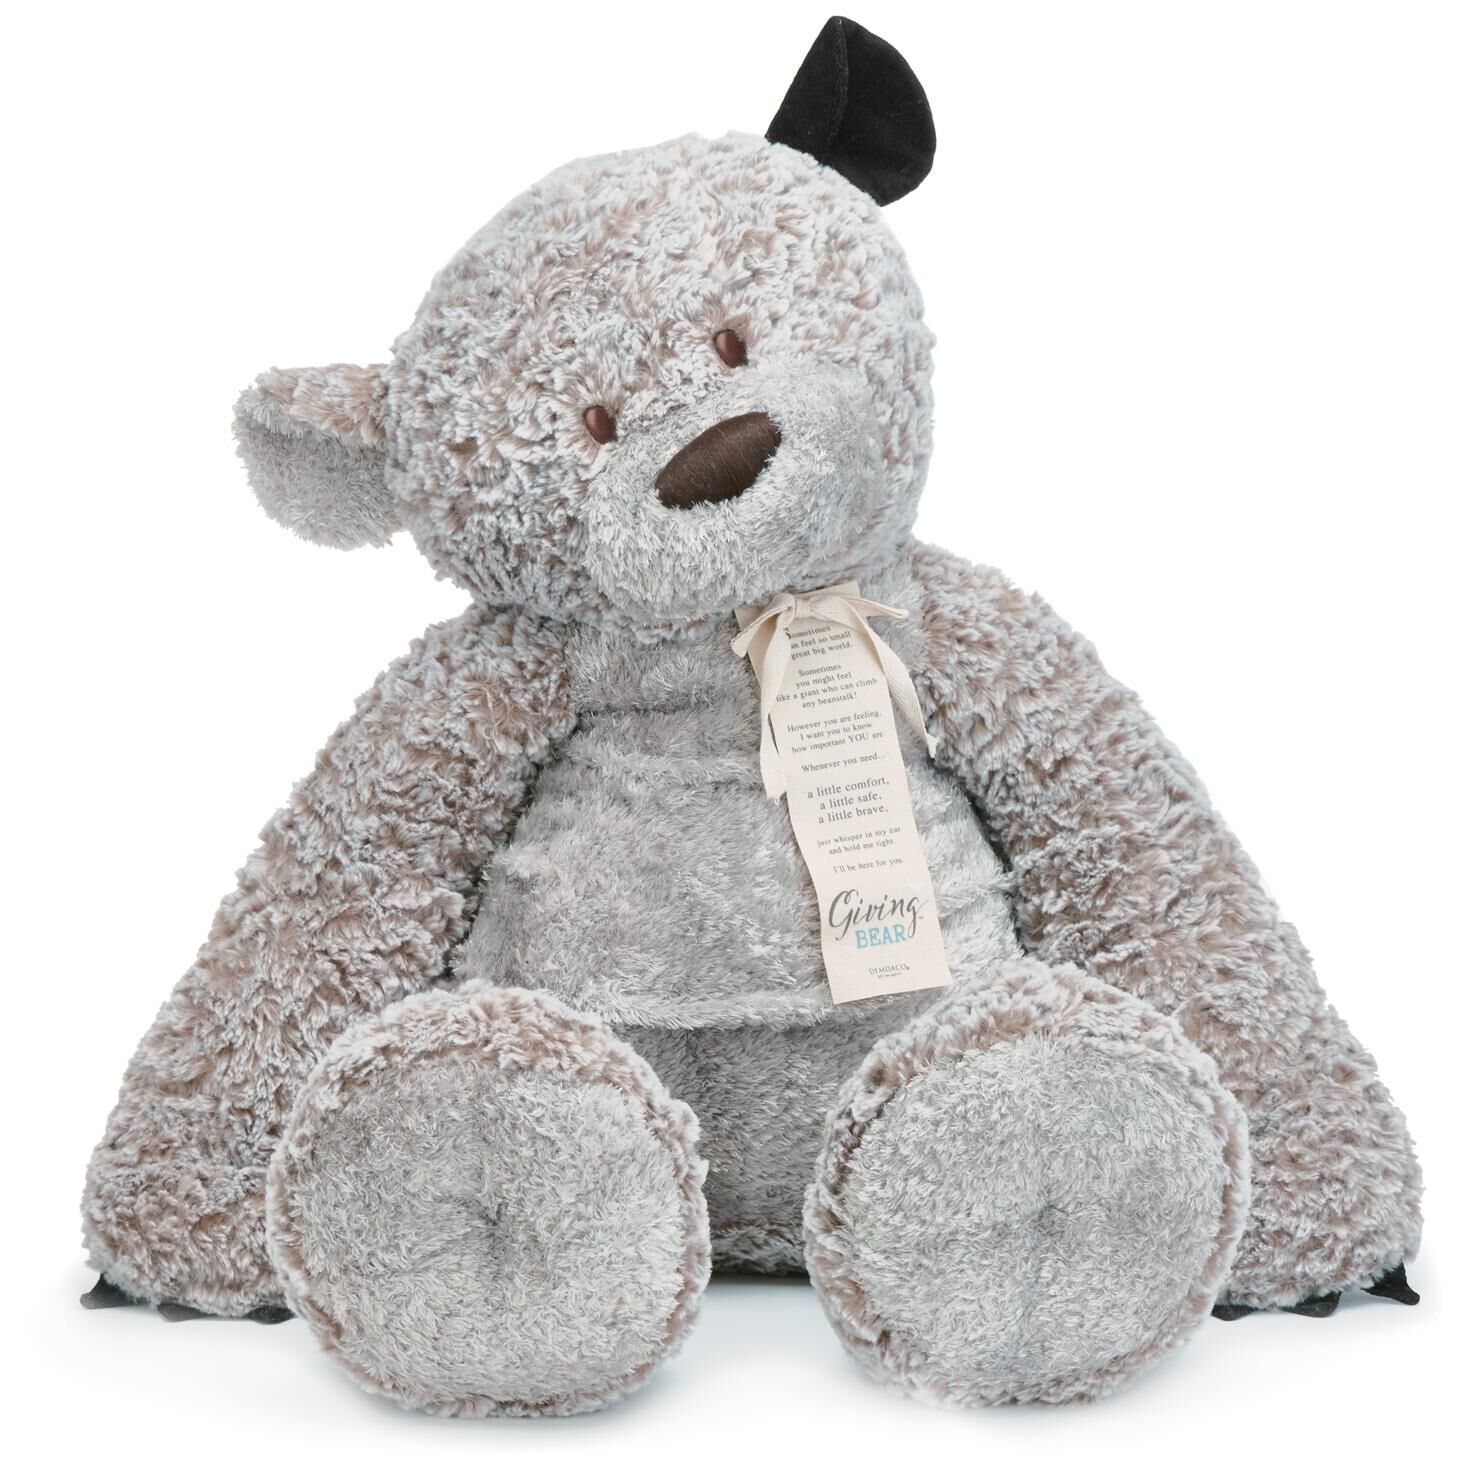 the giving bear stuffed animal